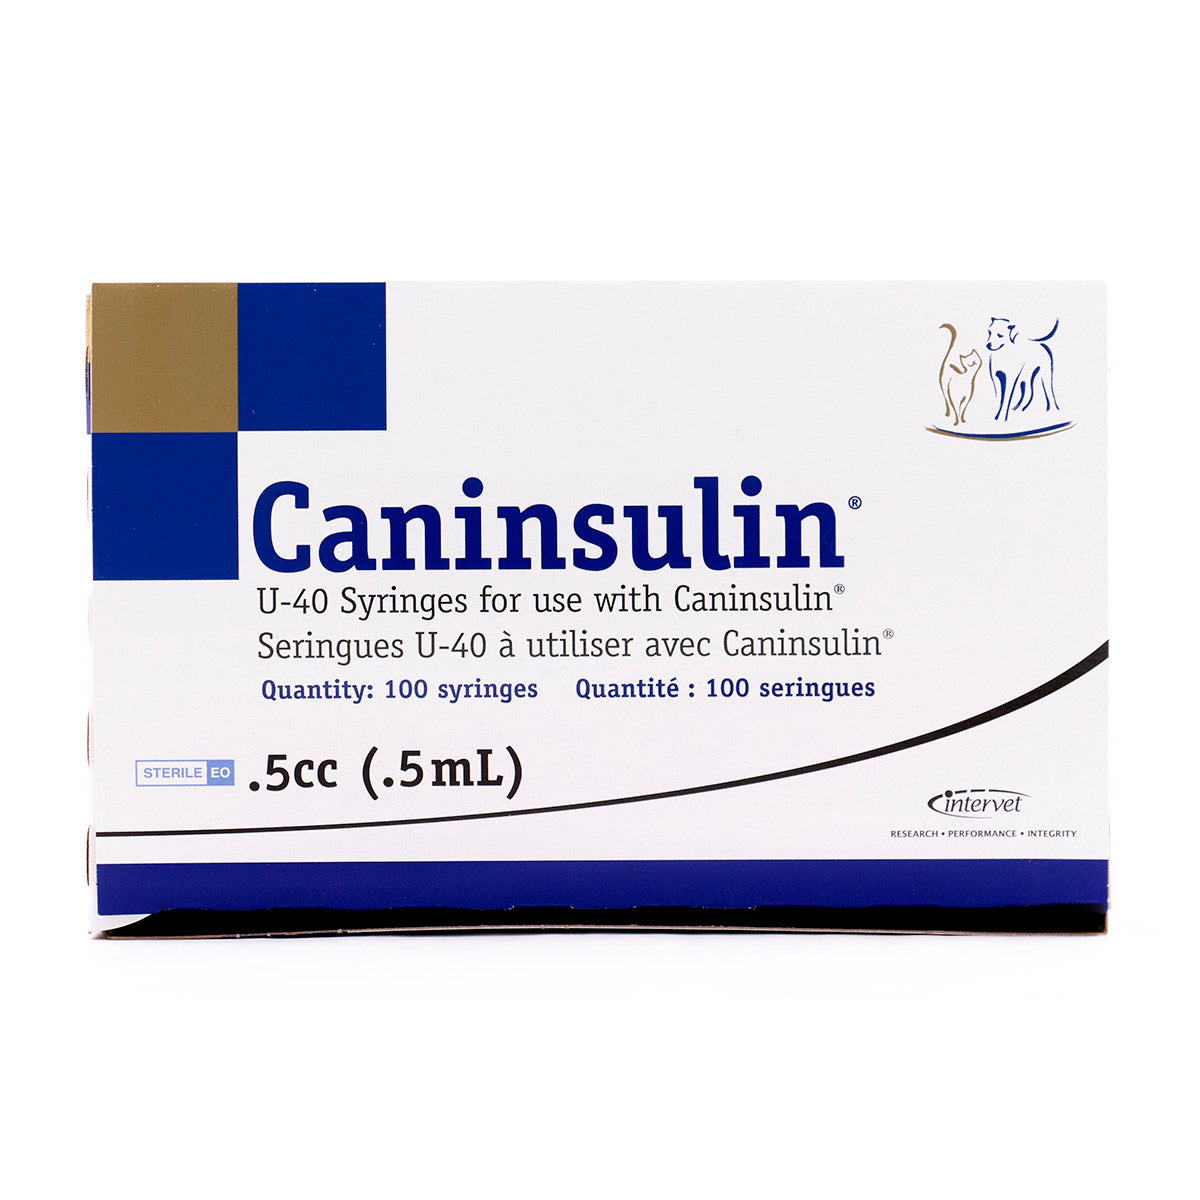 caninsulin canada